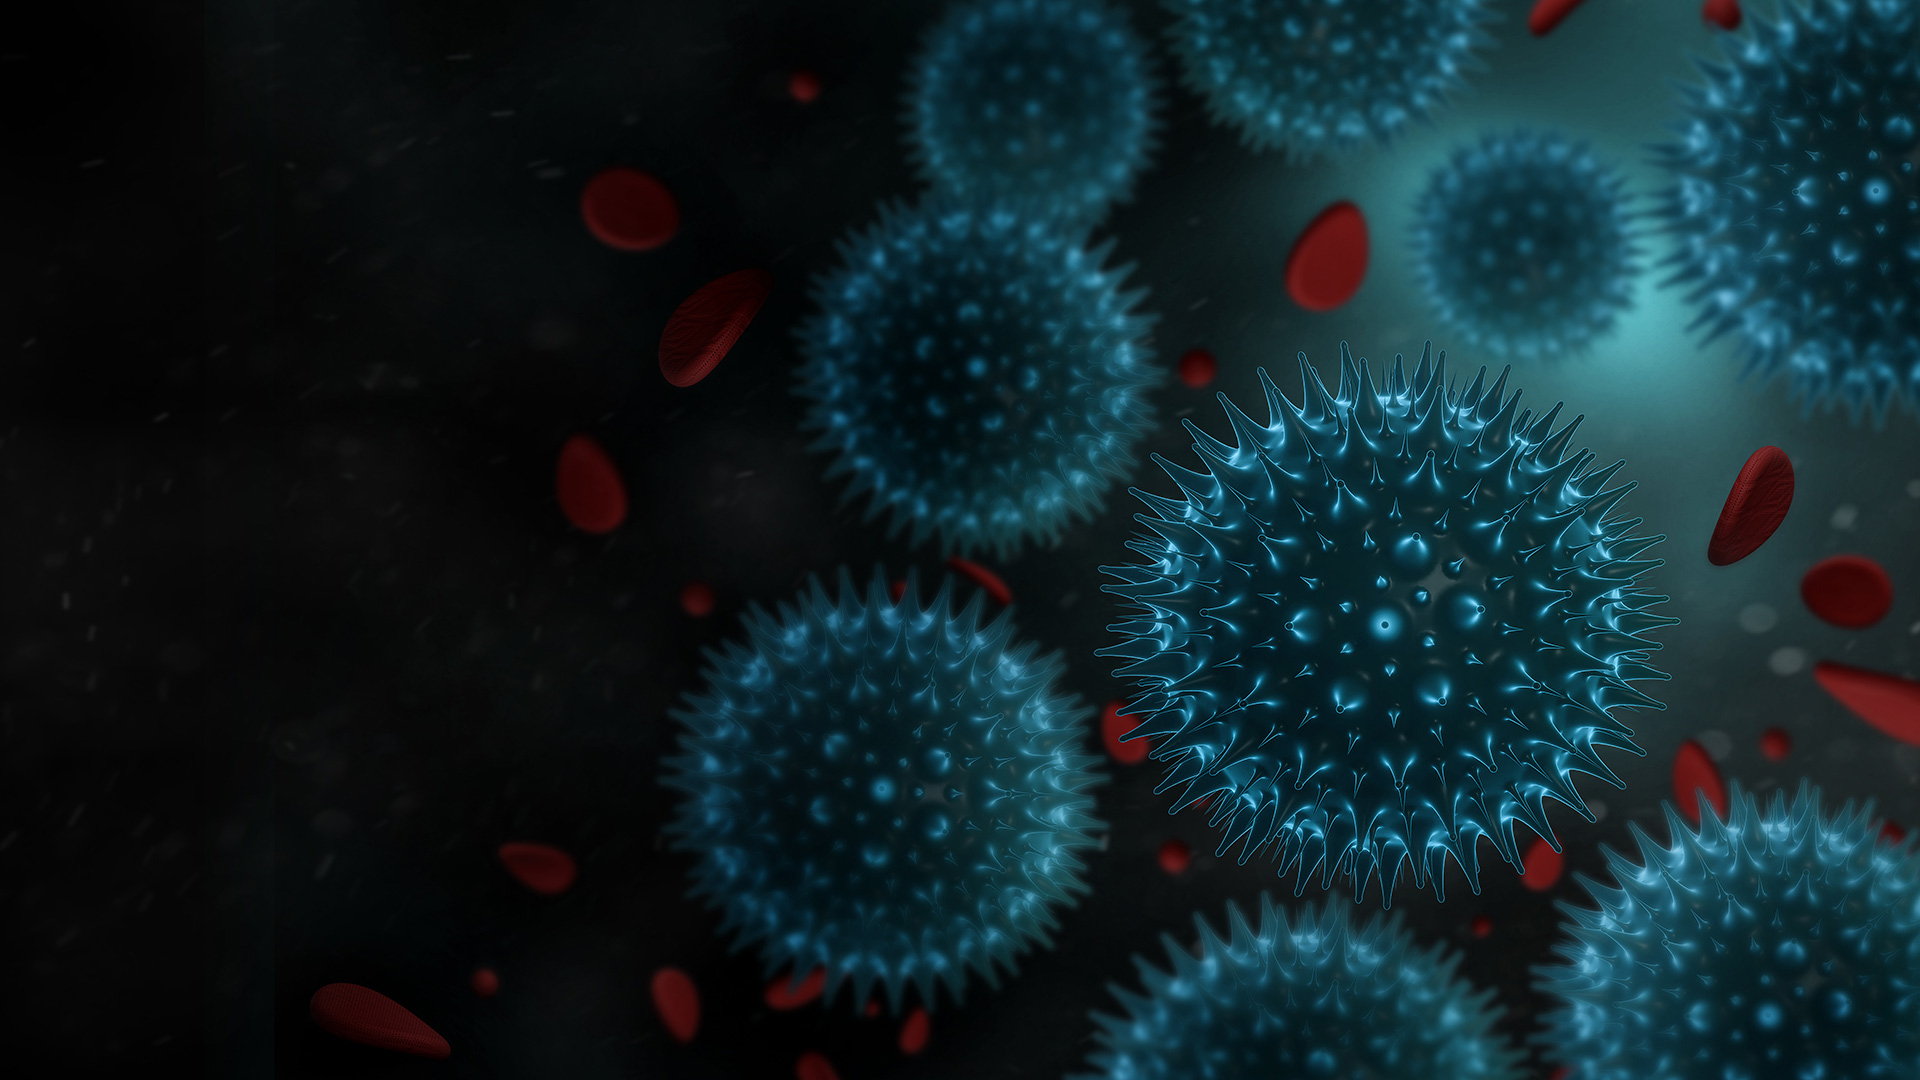 COVID-19 virus cells